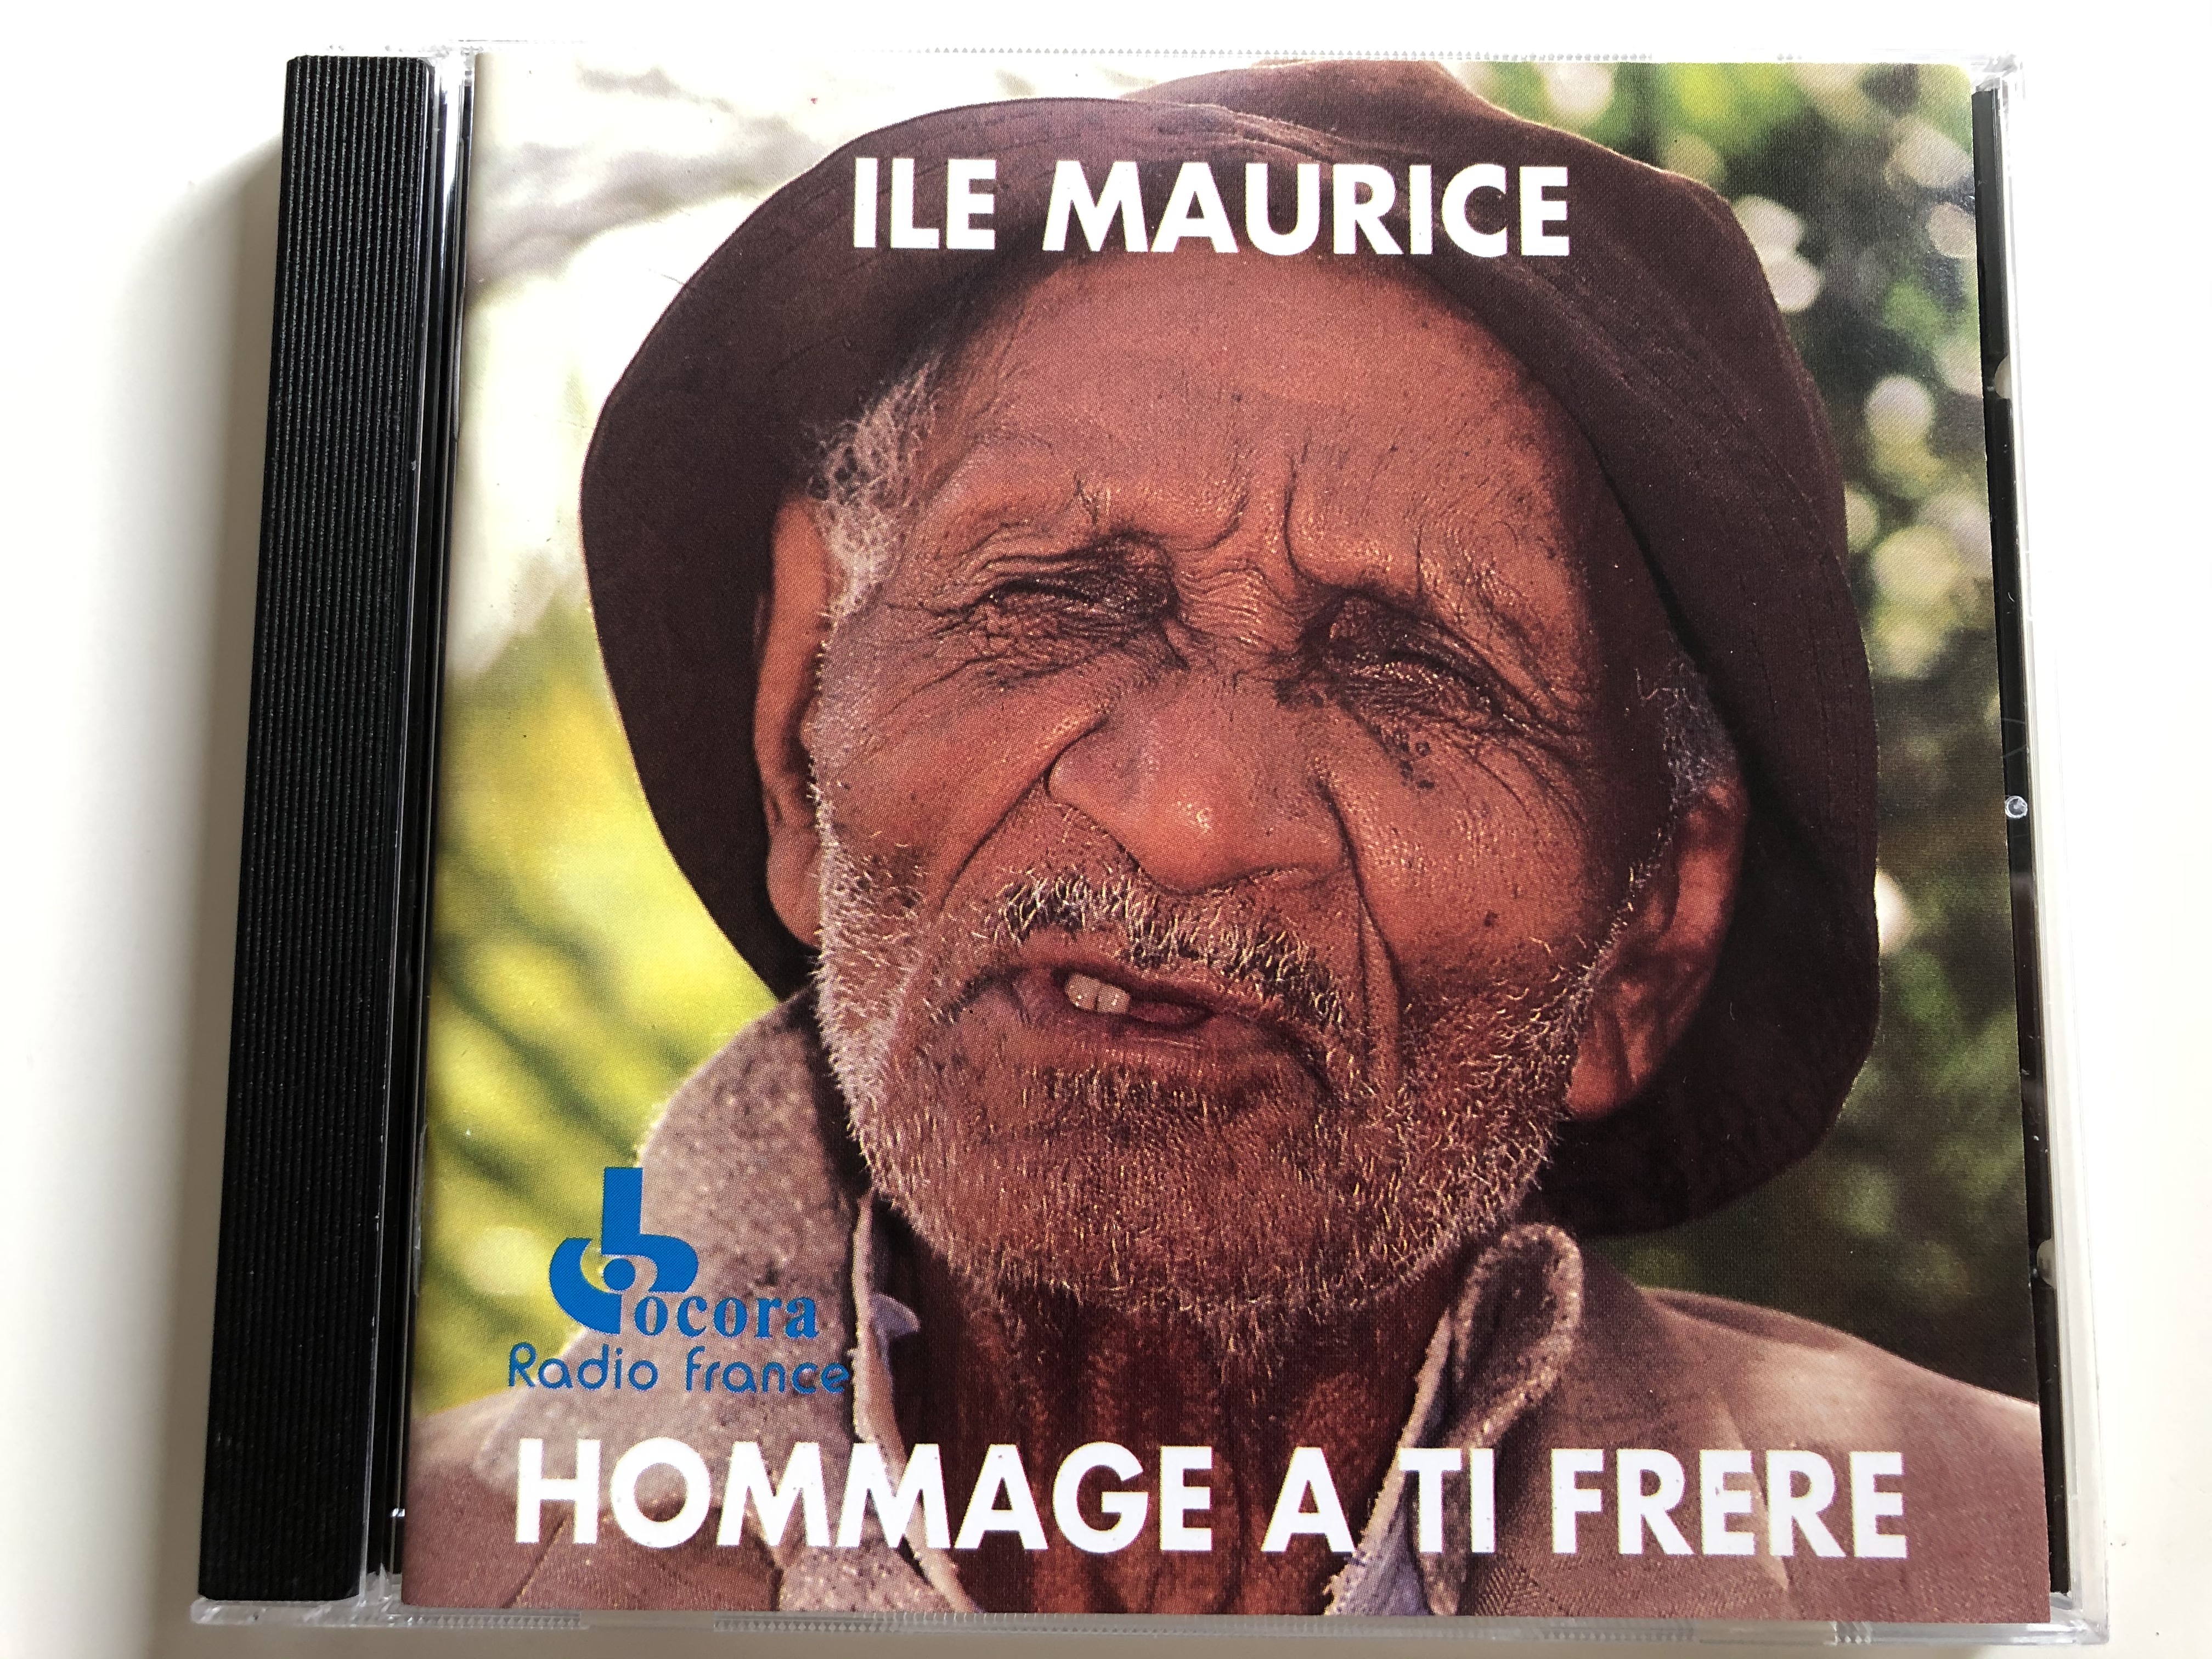 ile-maurice-hommage-a-ti-fr-re-ocora-audio-cd-1991-stereo-c-560019-1-.jpg